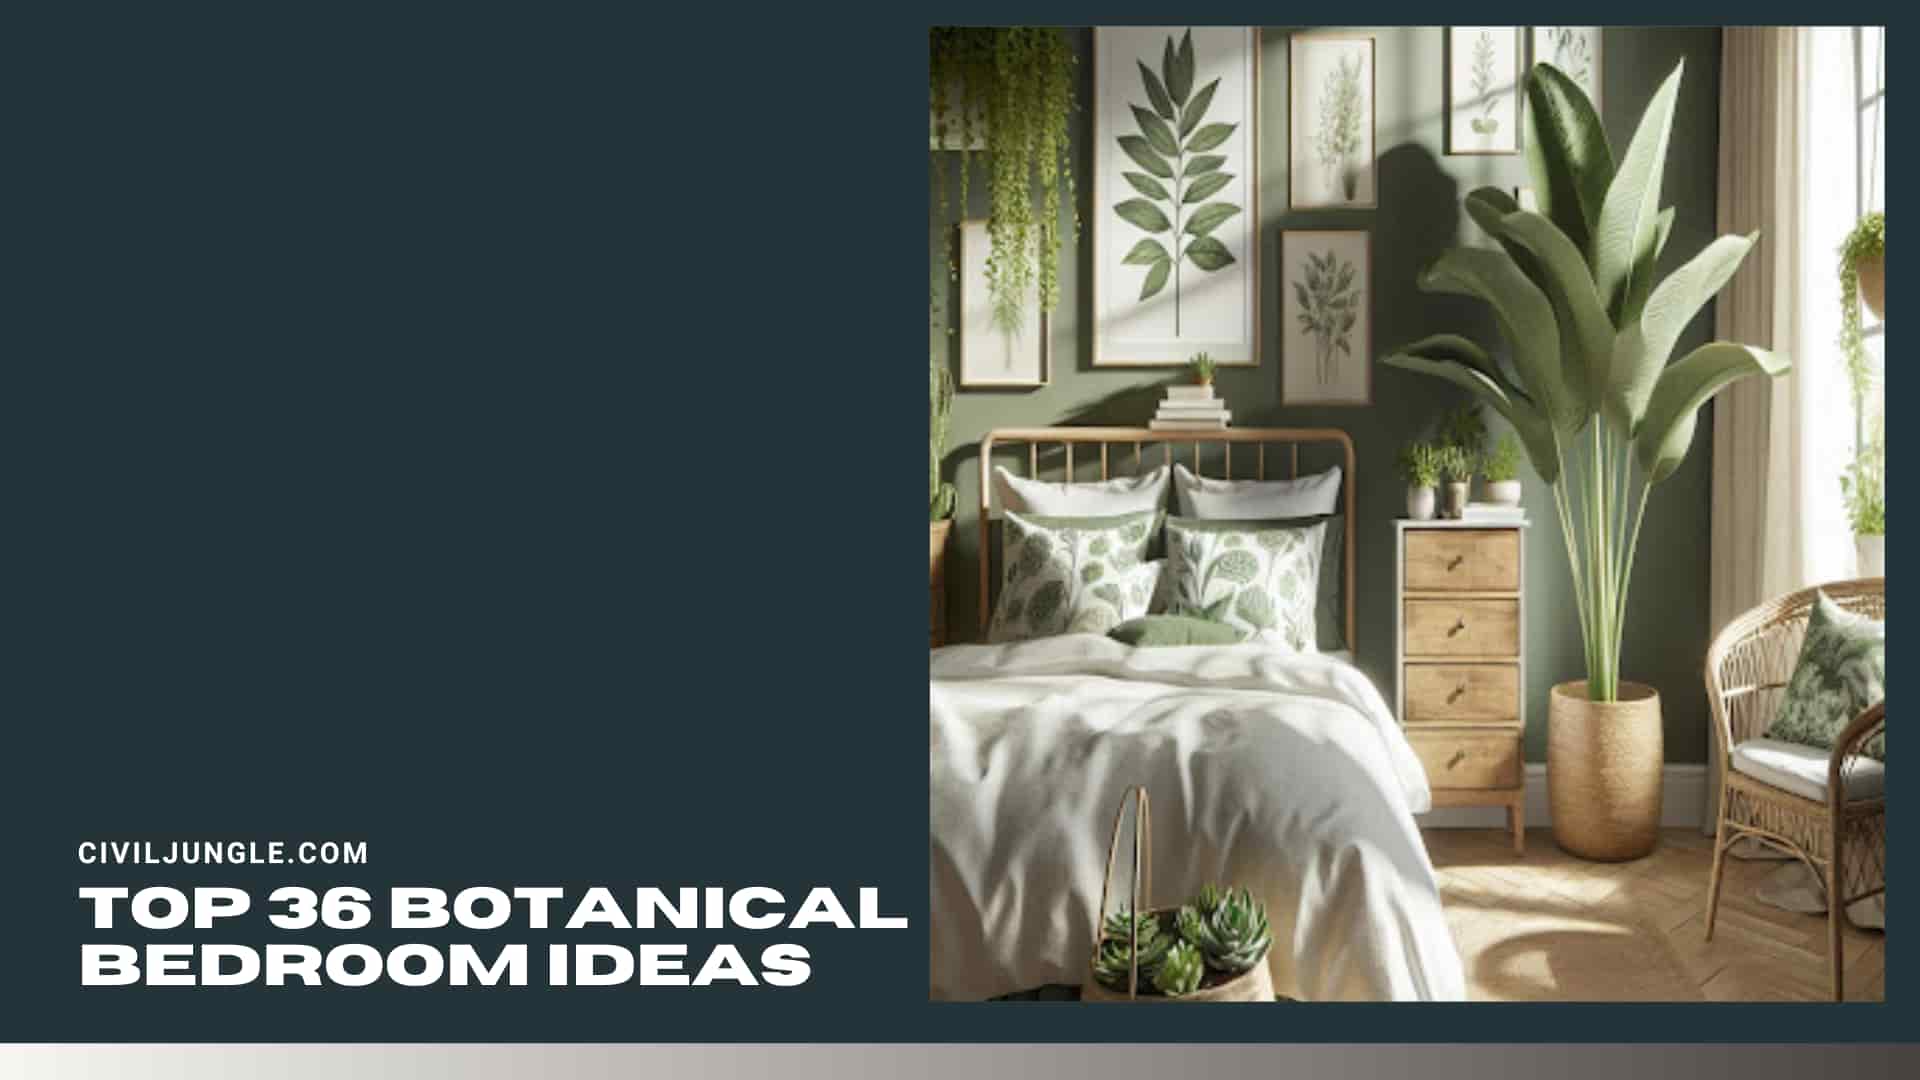 Top 36 Botanical Bedroom Ideas